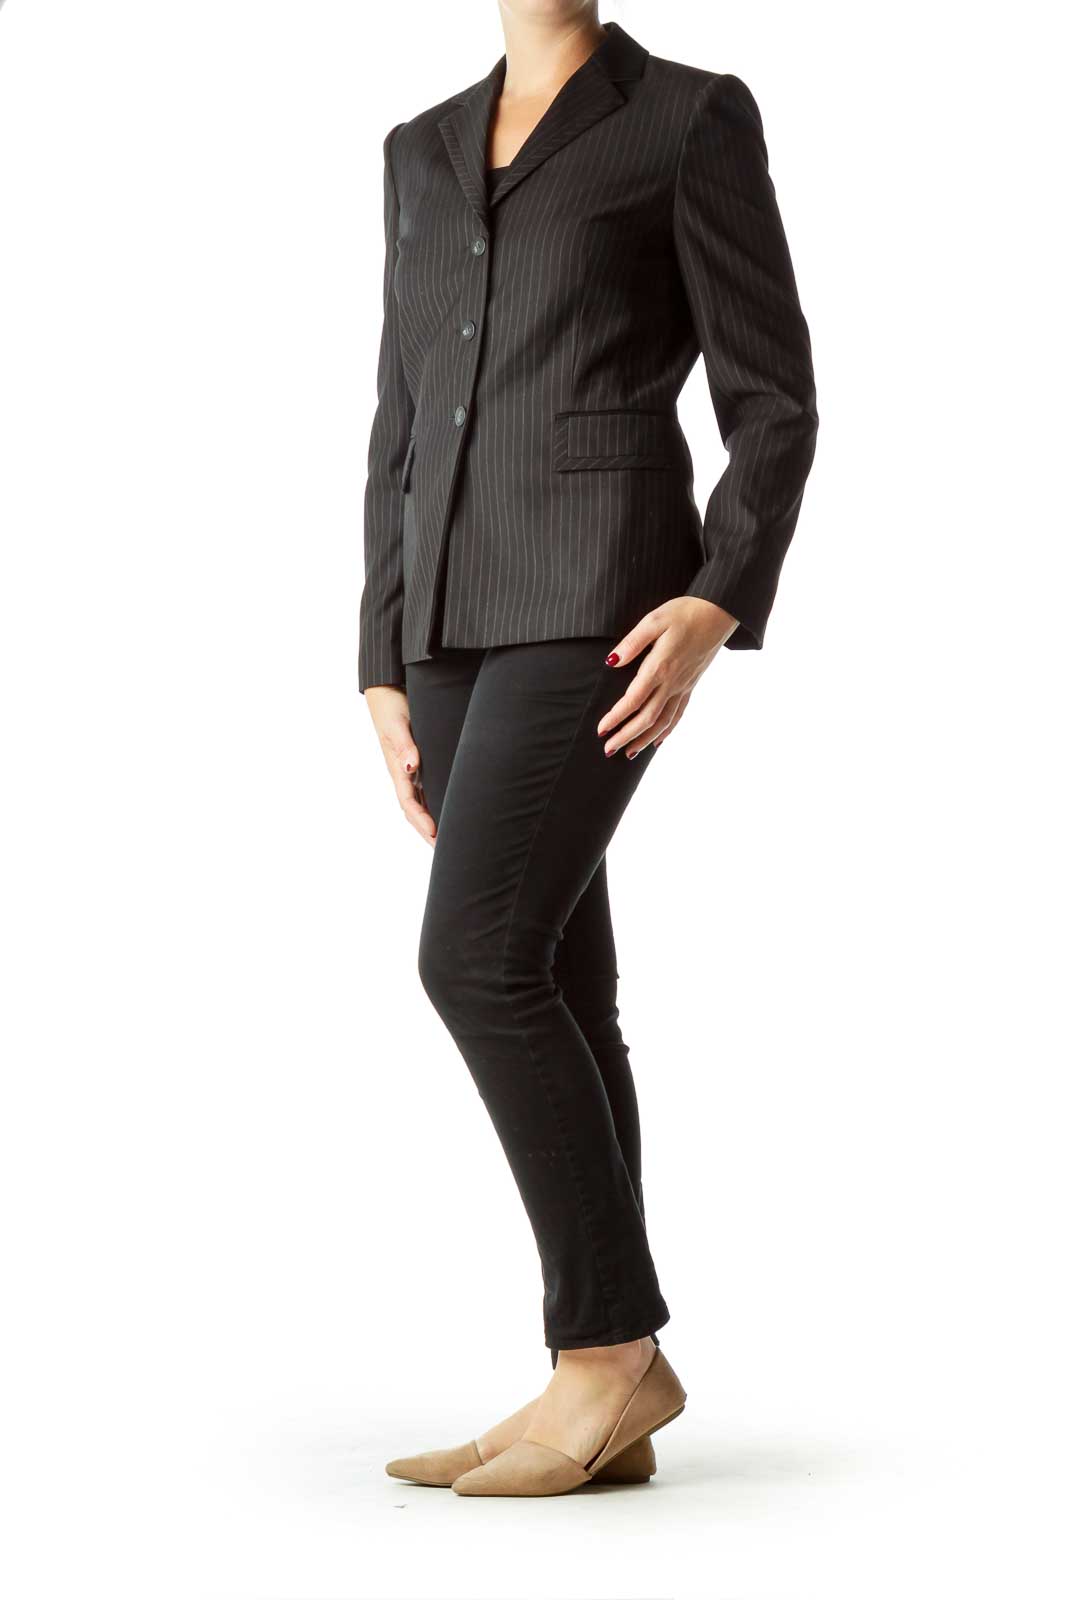 Calvin Klein - Black Pinstripe Suit Jacket Polyester Rayon